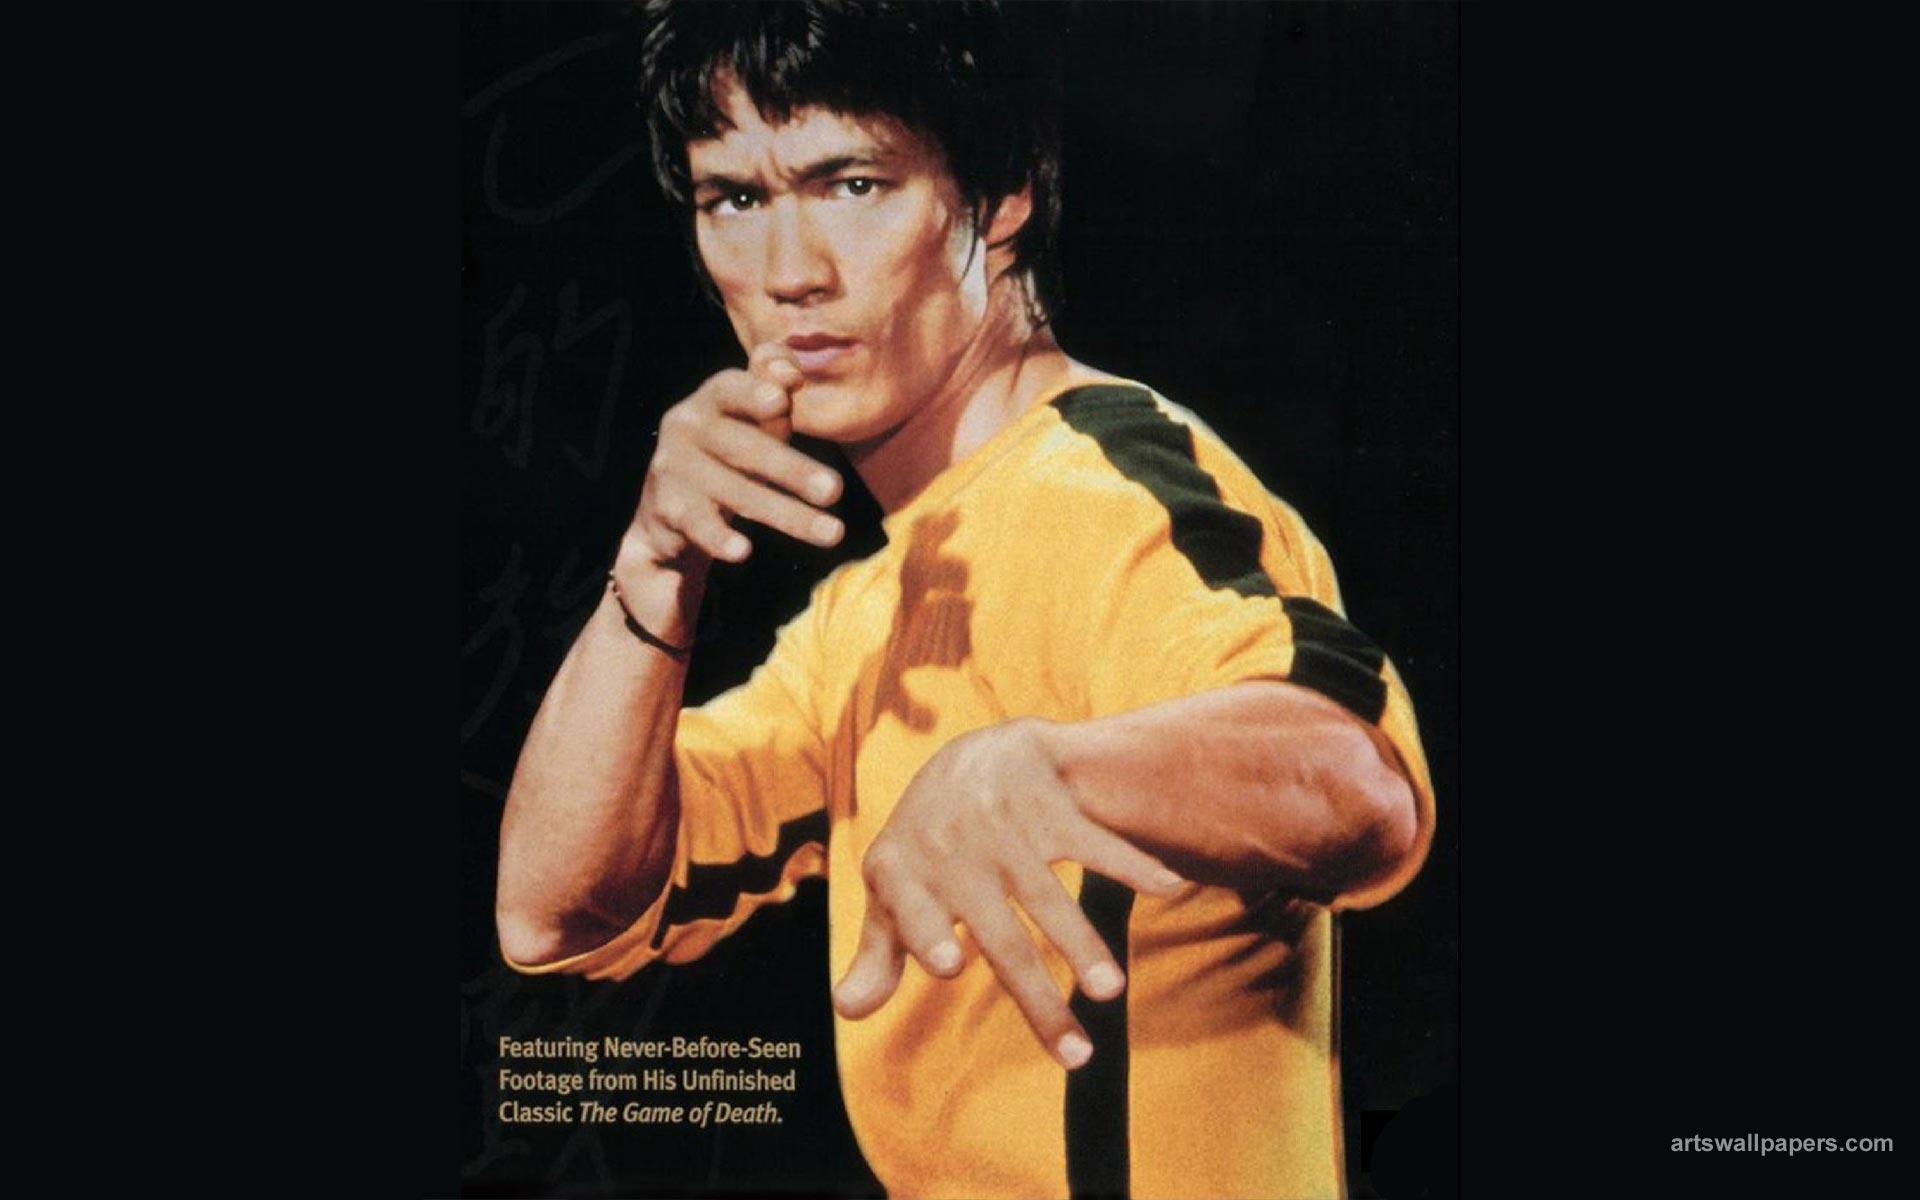 Bruce Lee Wallpaper For Mobile. Large HD Wallpaper Database